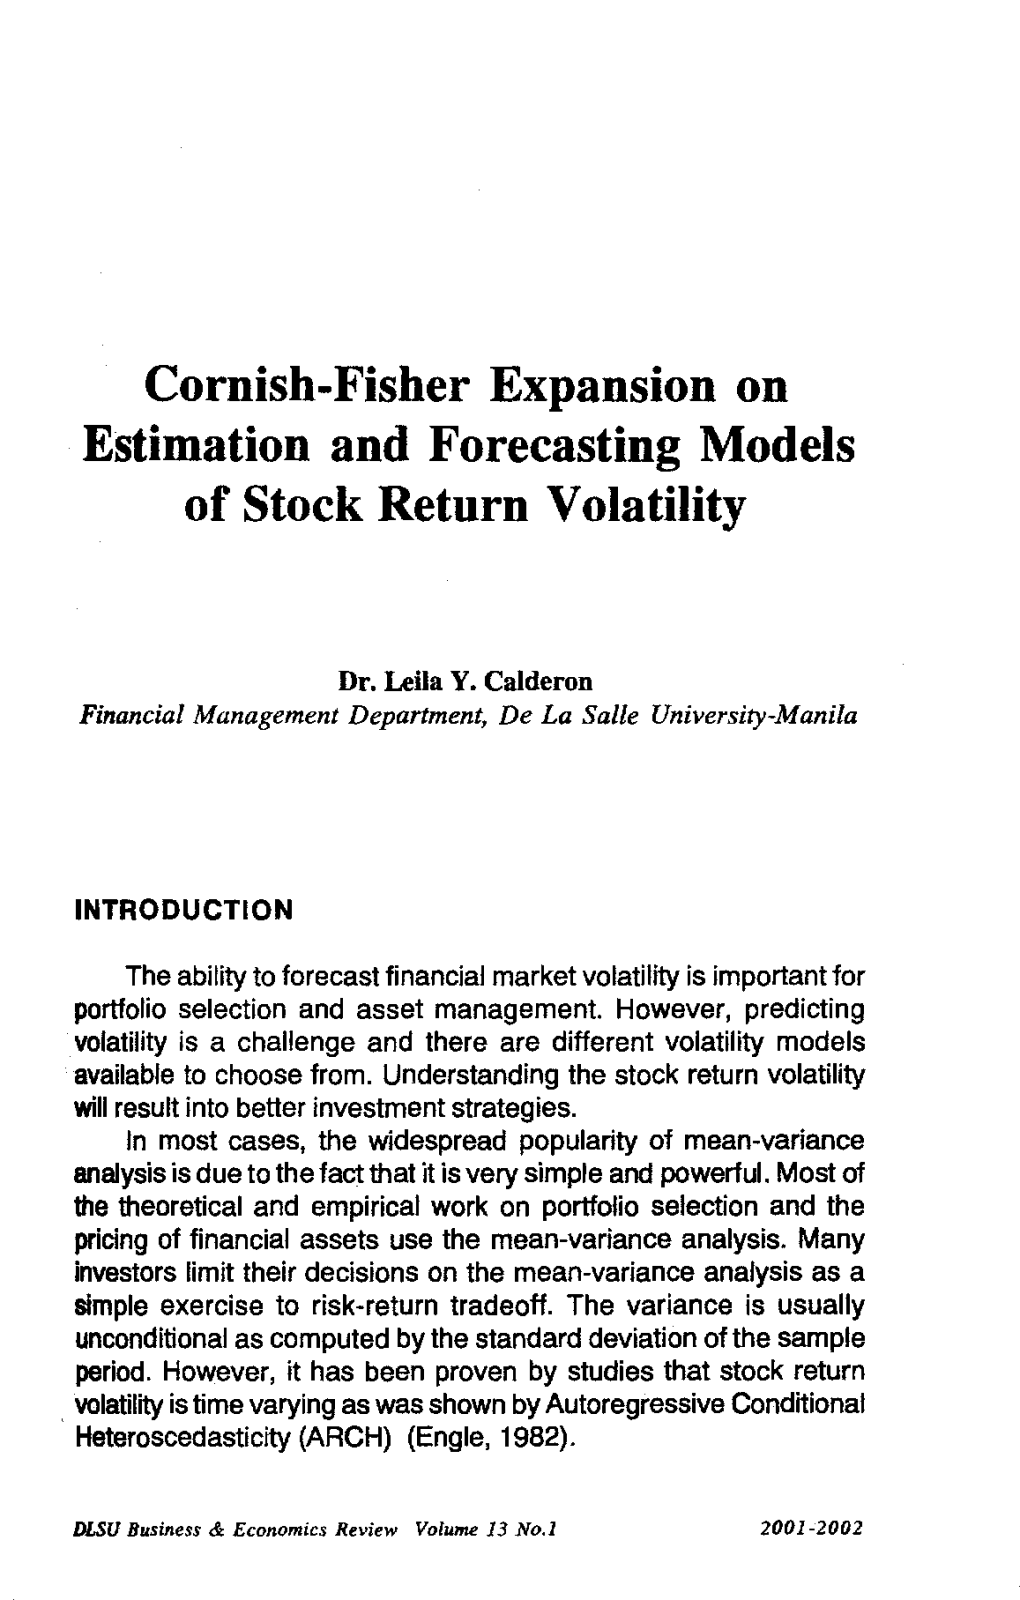 Cornish-Fisher Expansion on Estimation and Forecasting Models of Stock Return Volatility